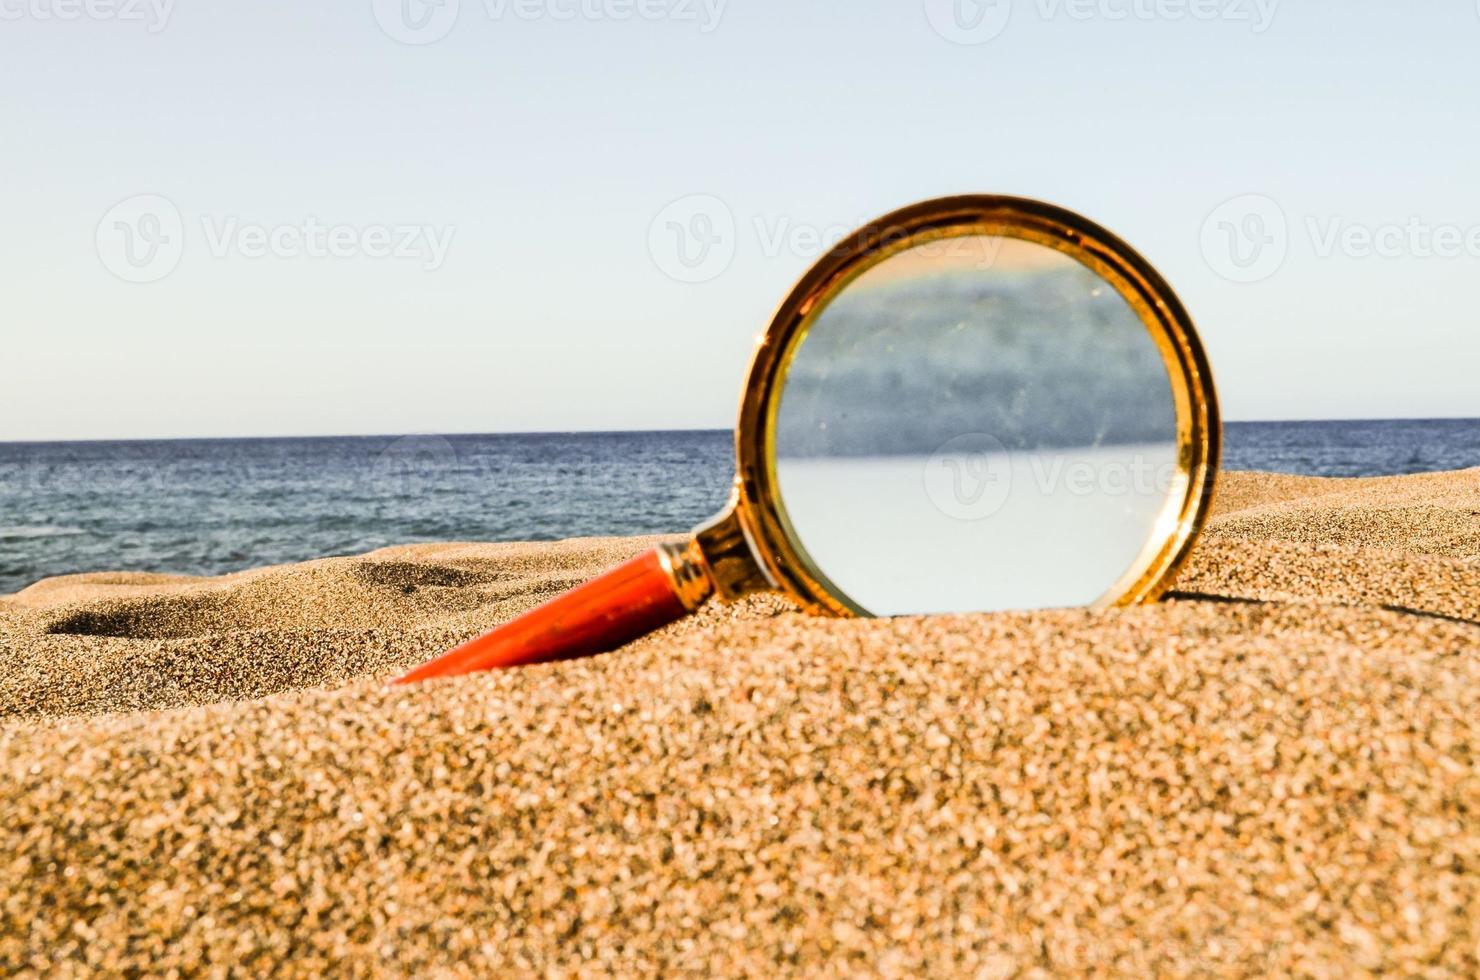 vergroten glas in de zand foto